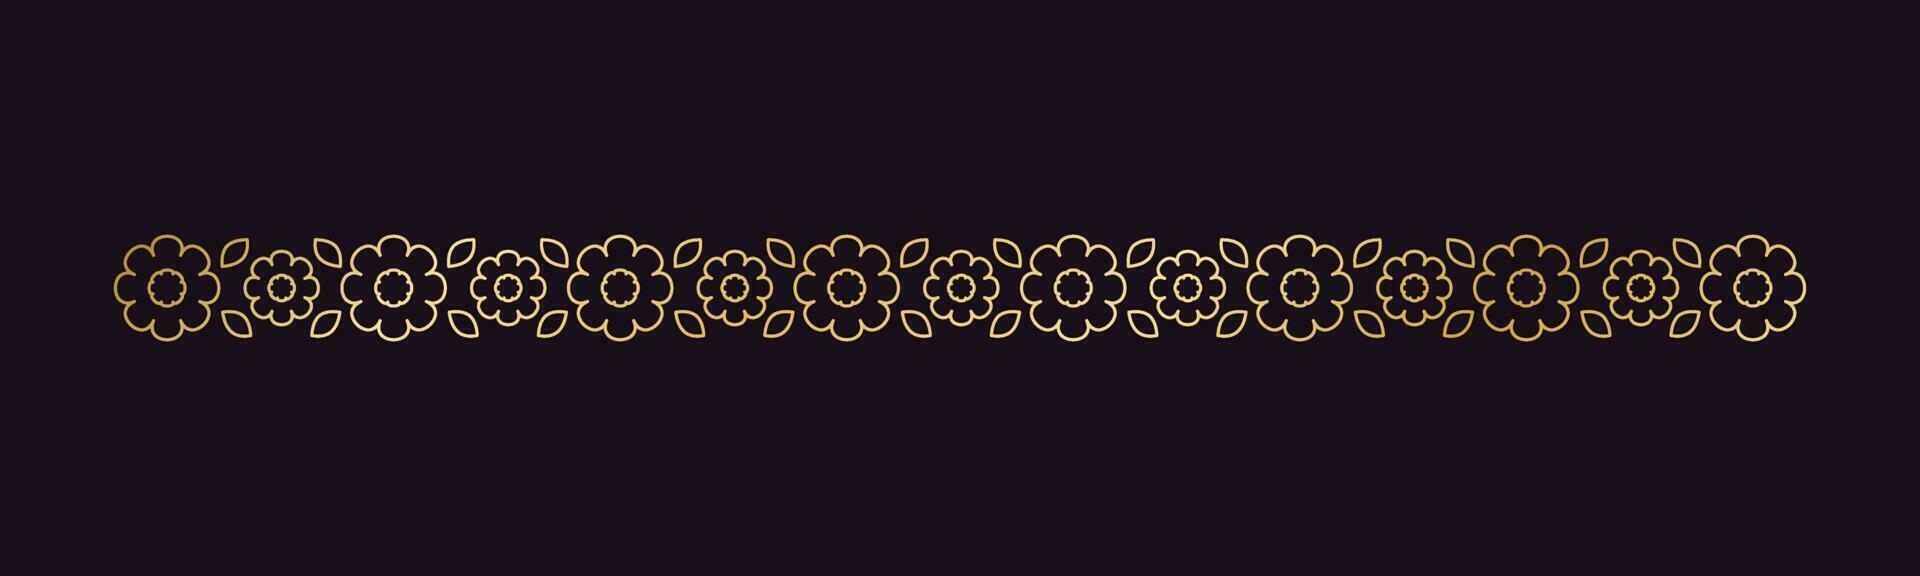 Gold floral separators border, text dividers. Line borders botanical luxury design element. vector